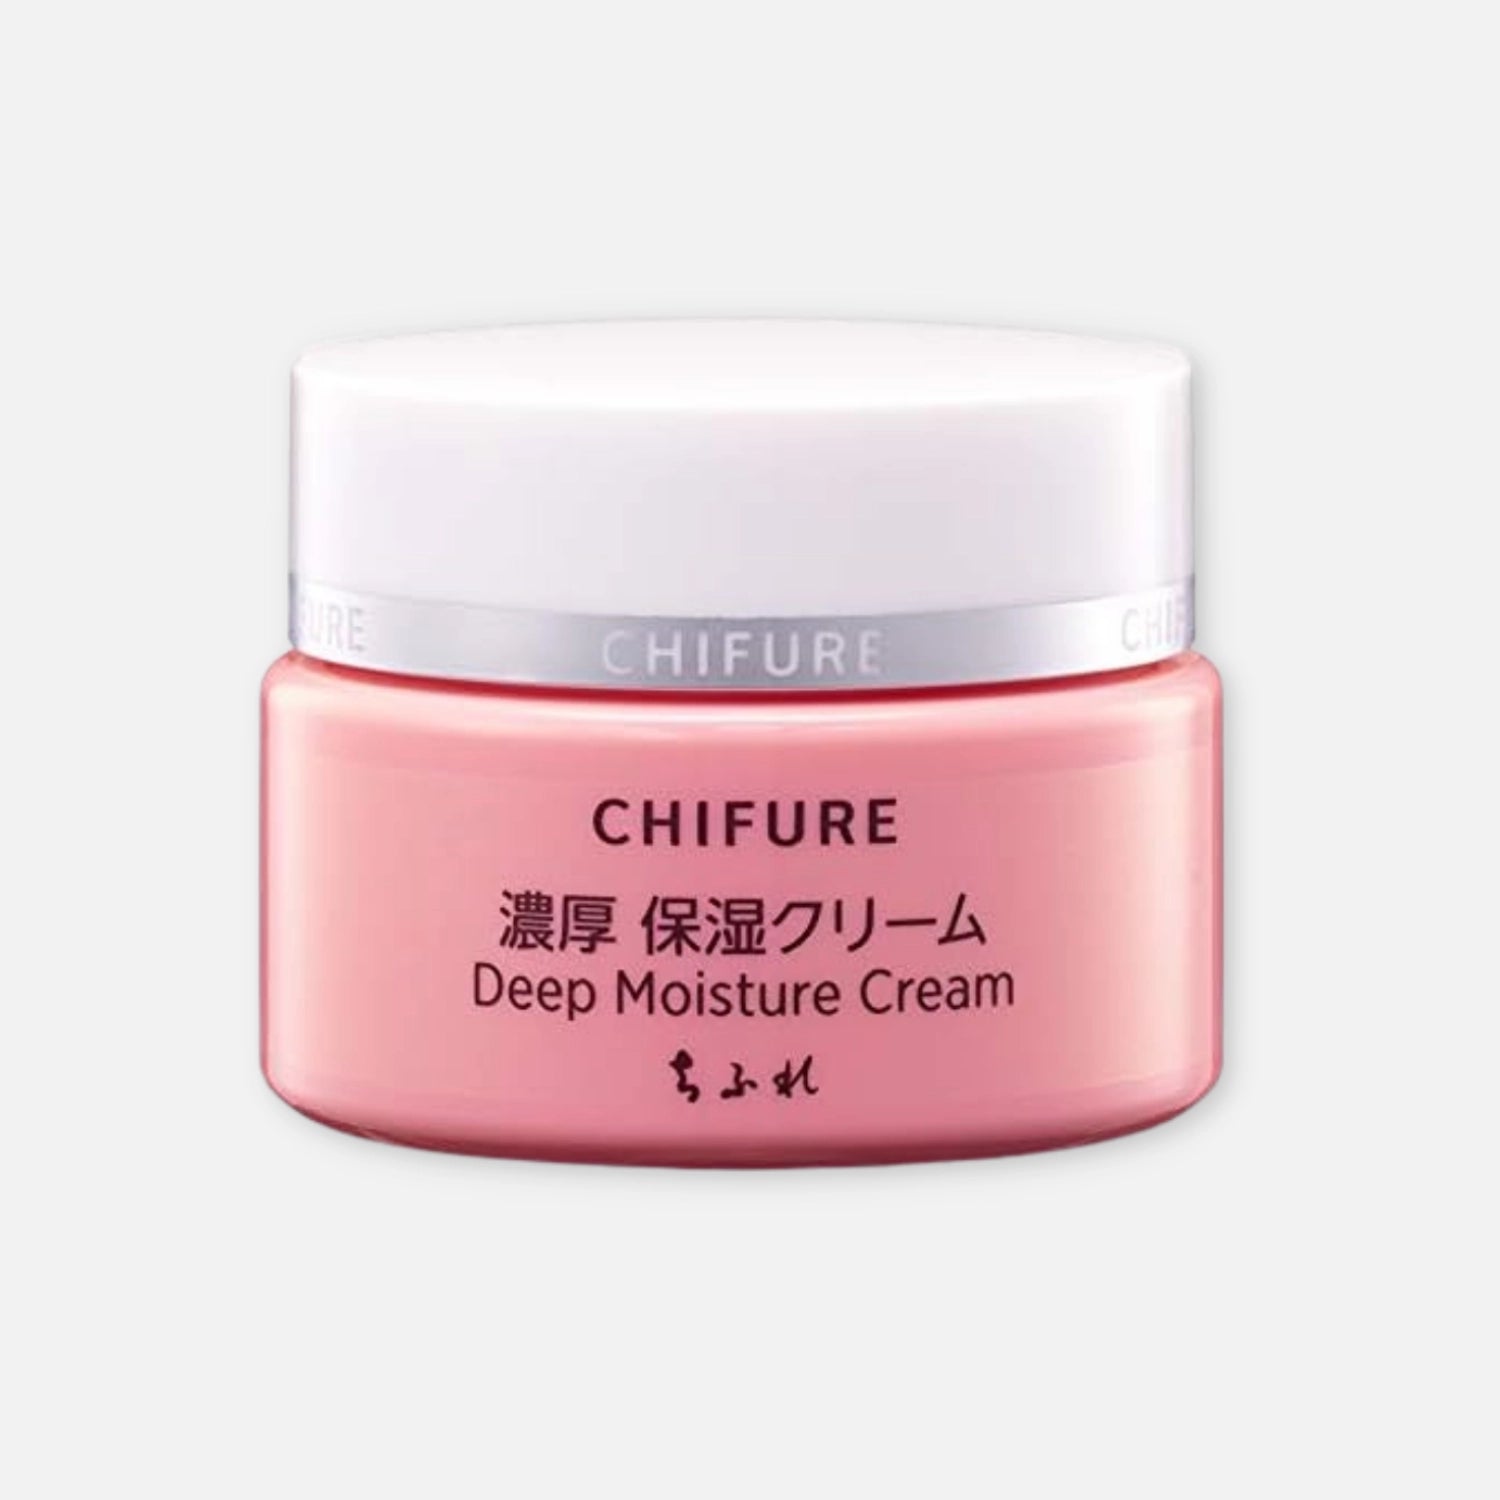 Chifure Deep Moisture Cream Aging Care 54g - Buy Me Japan